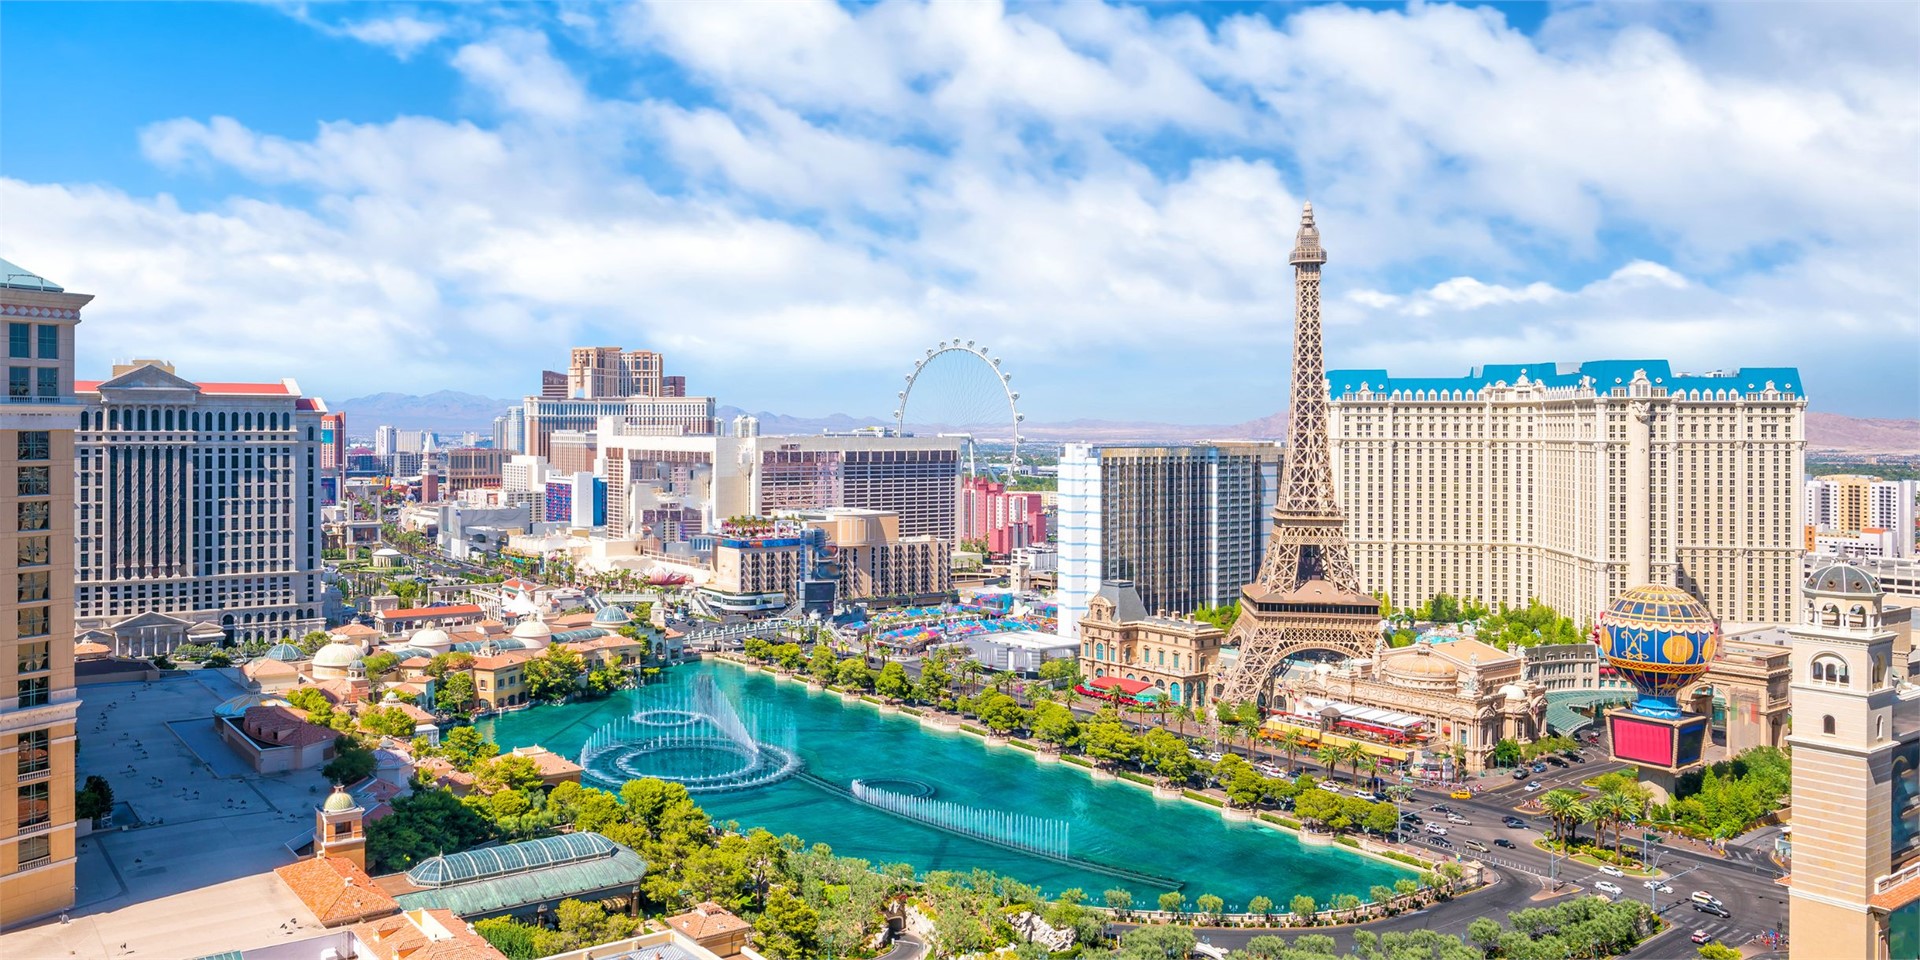 Book your trip to Las Vegas gambler's paradise